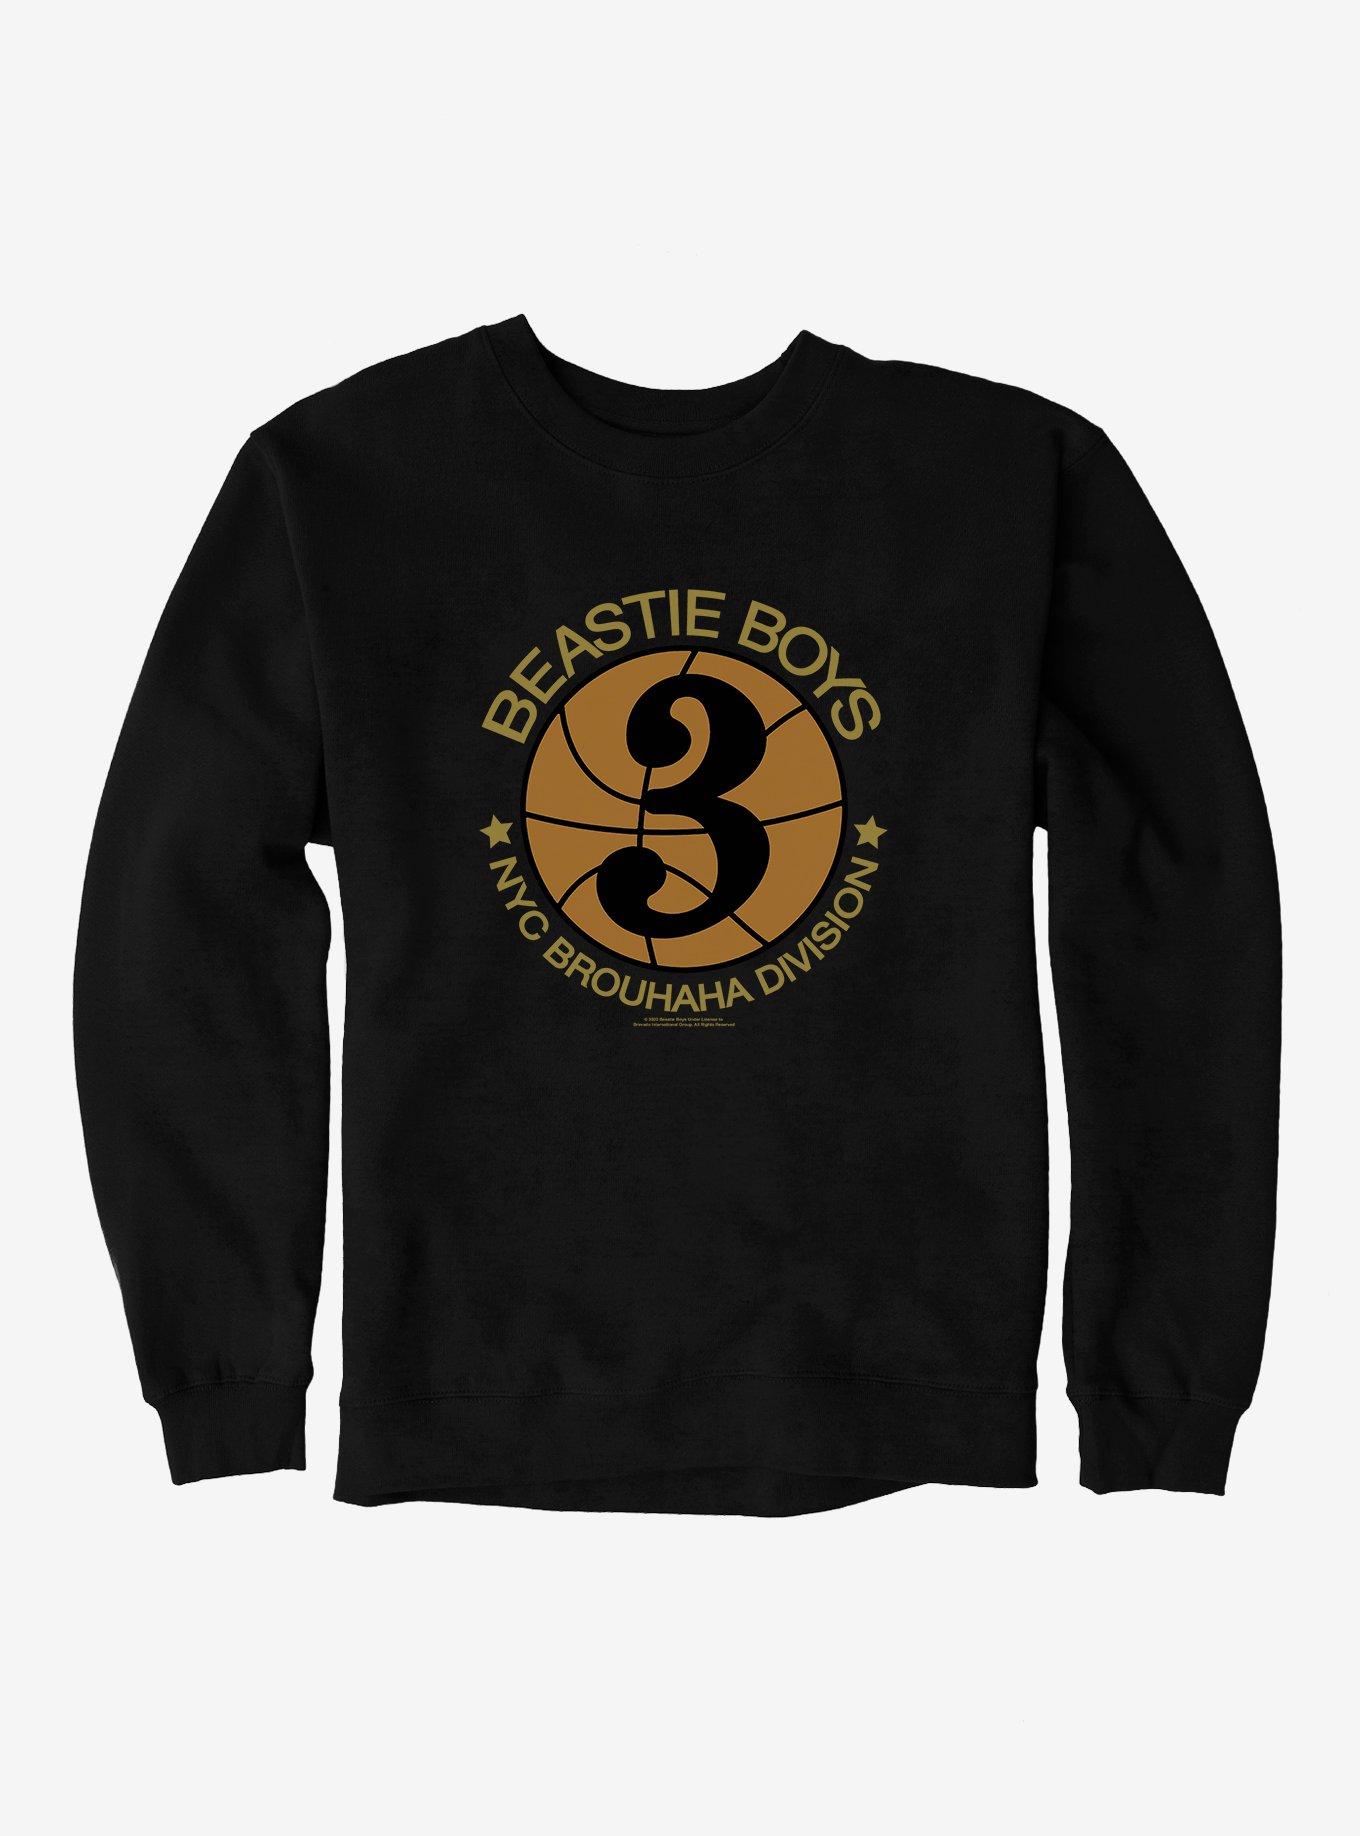 Beastie Boys NYC Brouhaha Division Sweatshirt, BLACK, hi-res